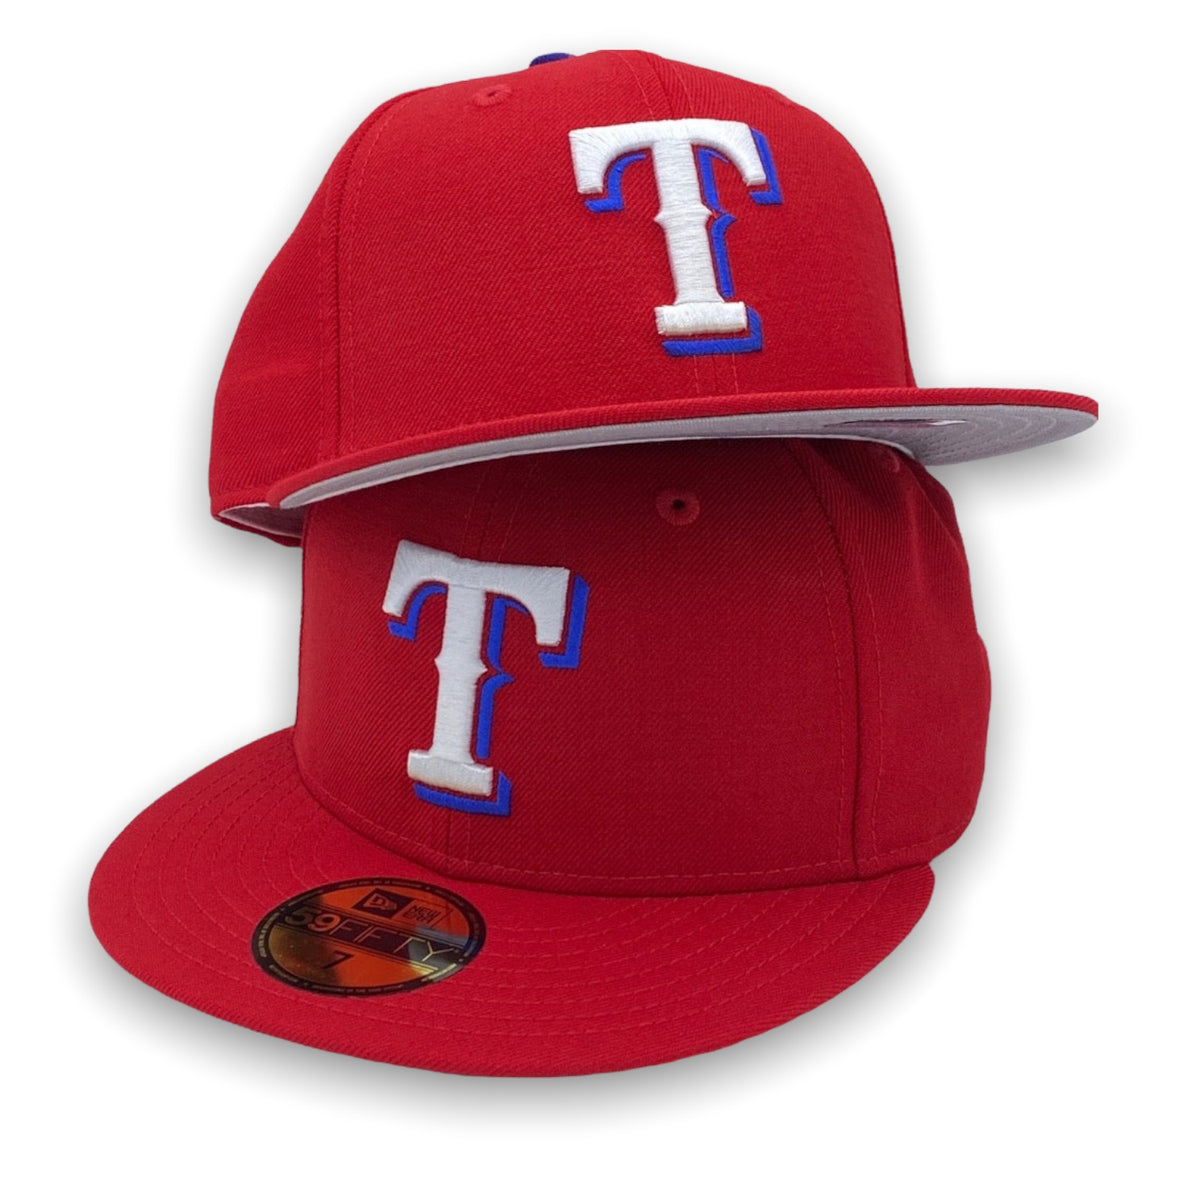 New Era, Accessories, New Era Texas Rangers Hat Cooperstown 9 Fifty